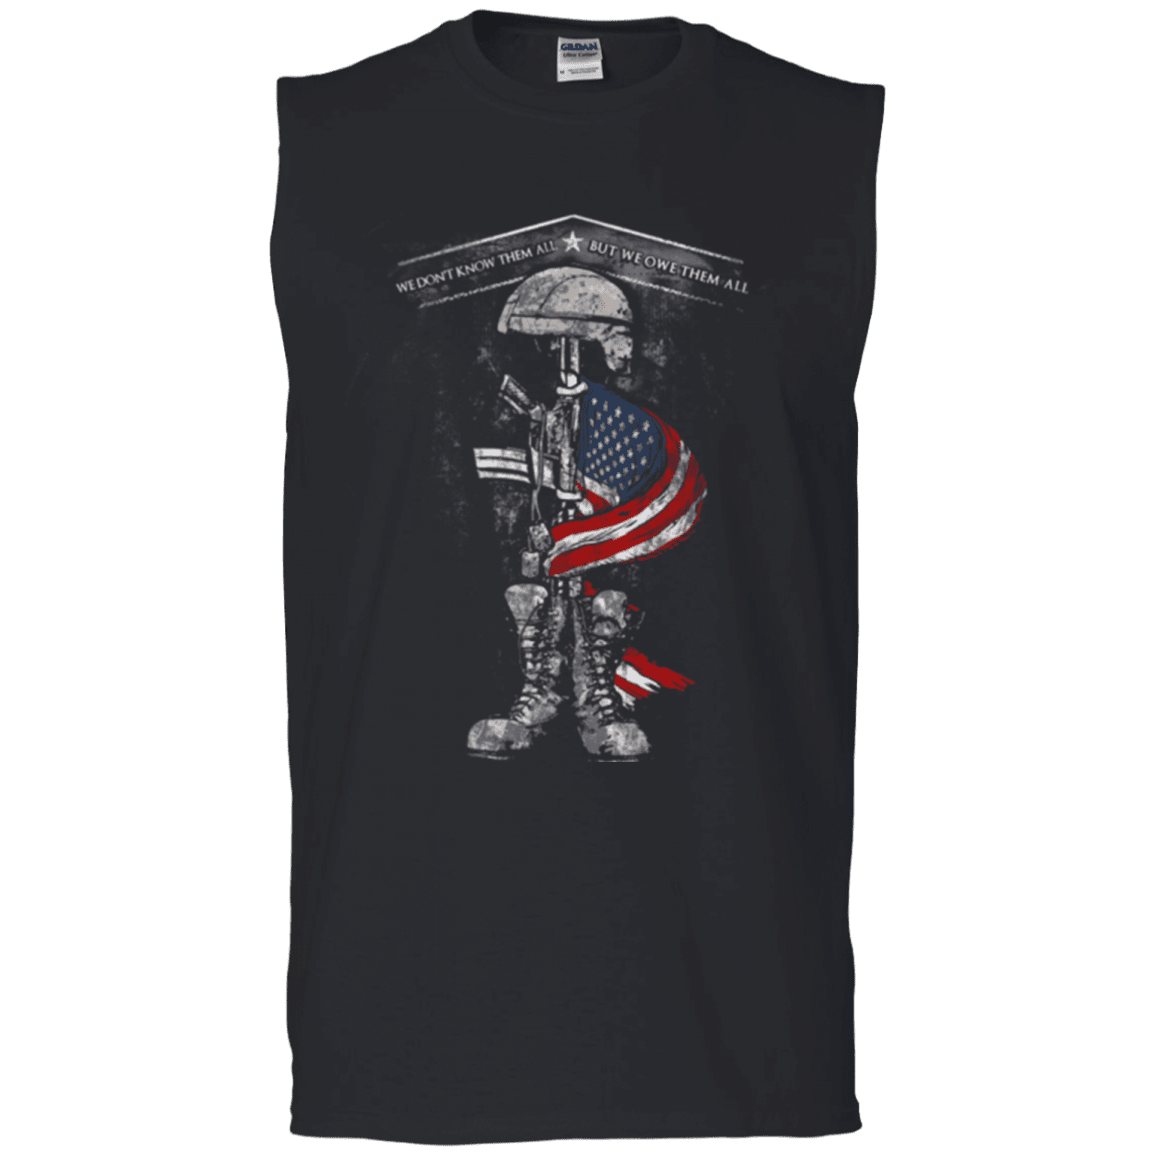 Military T-Shirt "WE OWE THEM ALL"-TShirt-General-Veterans Nation